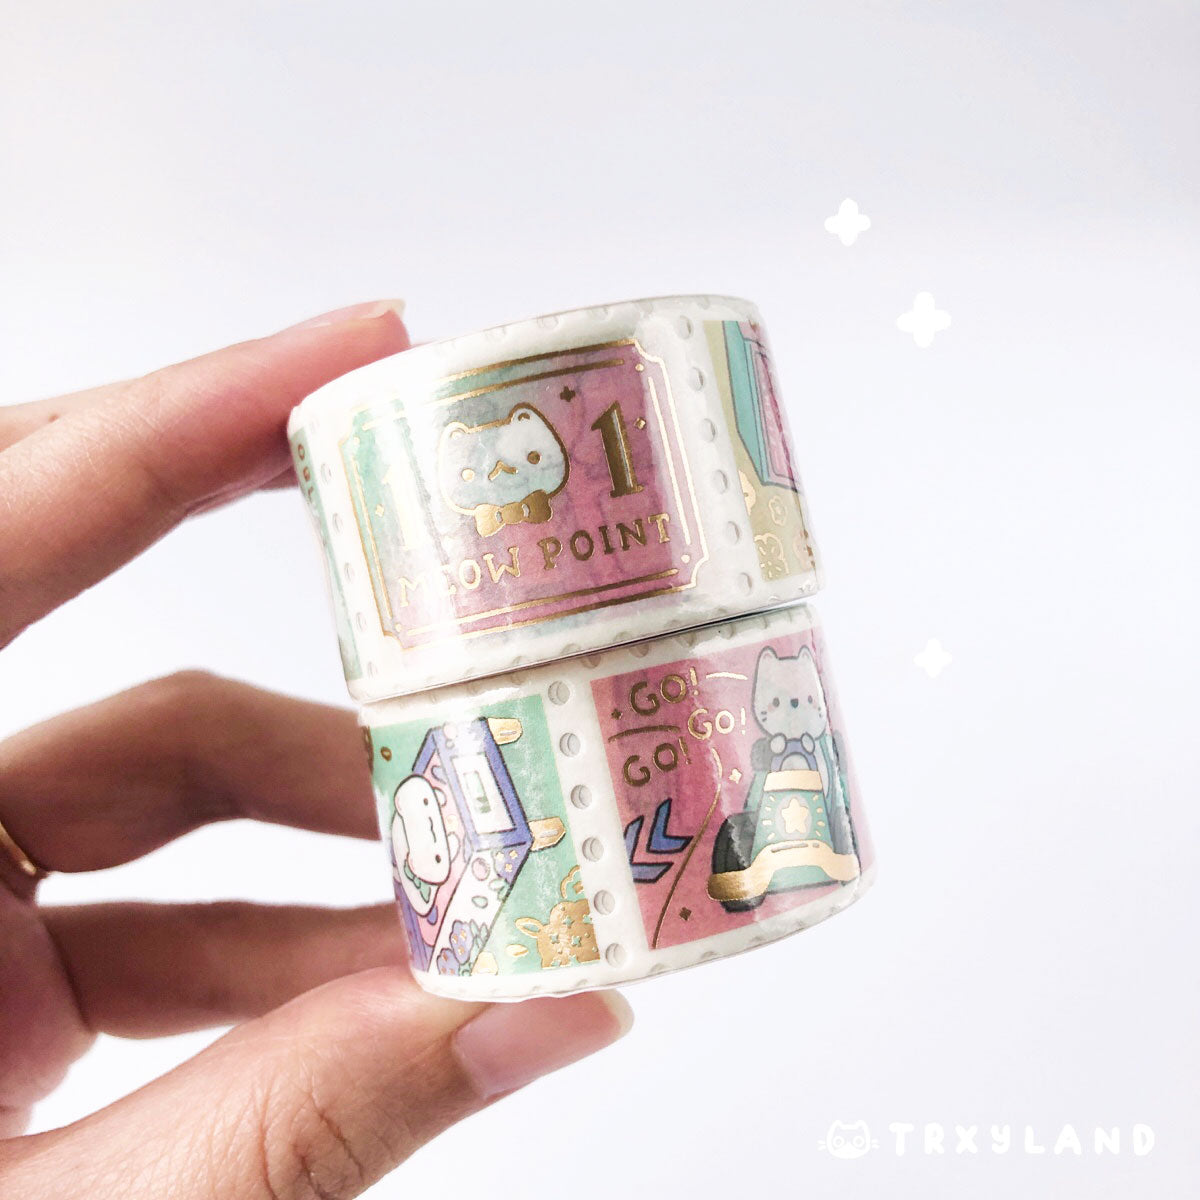 Arcade Kitty Foil Stamp Washi Tape